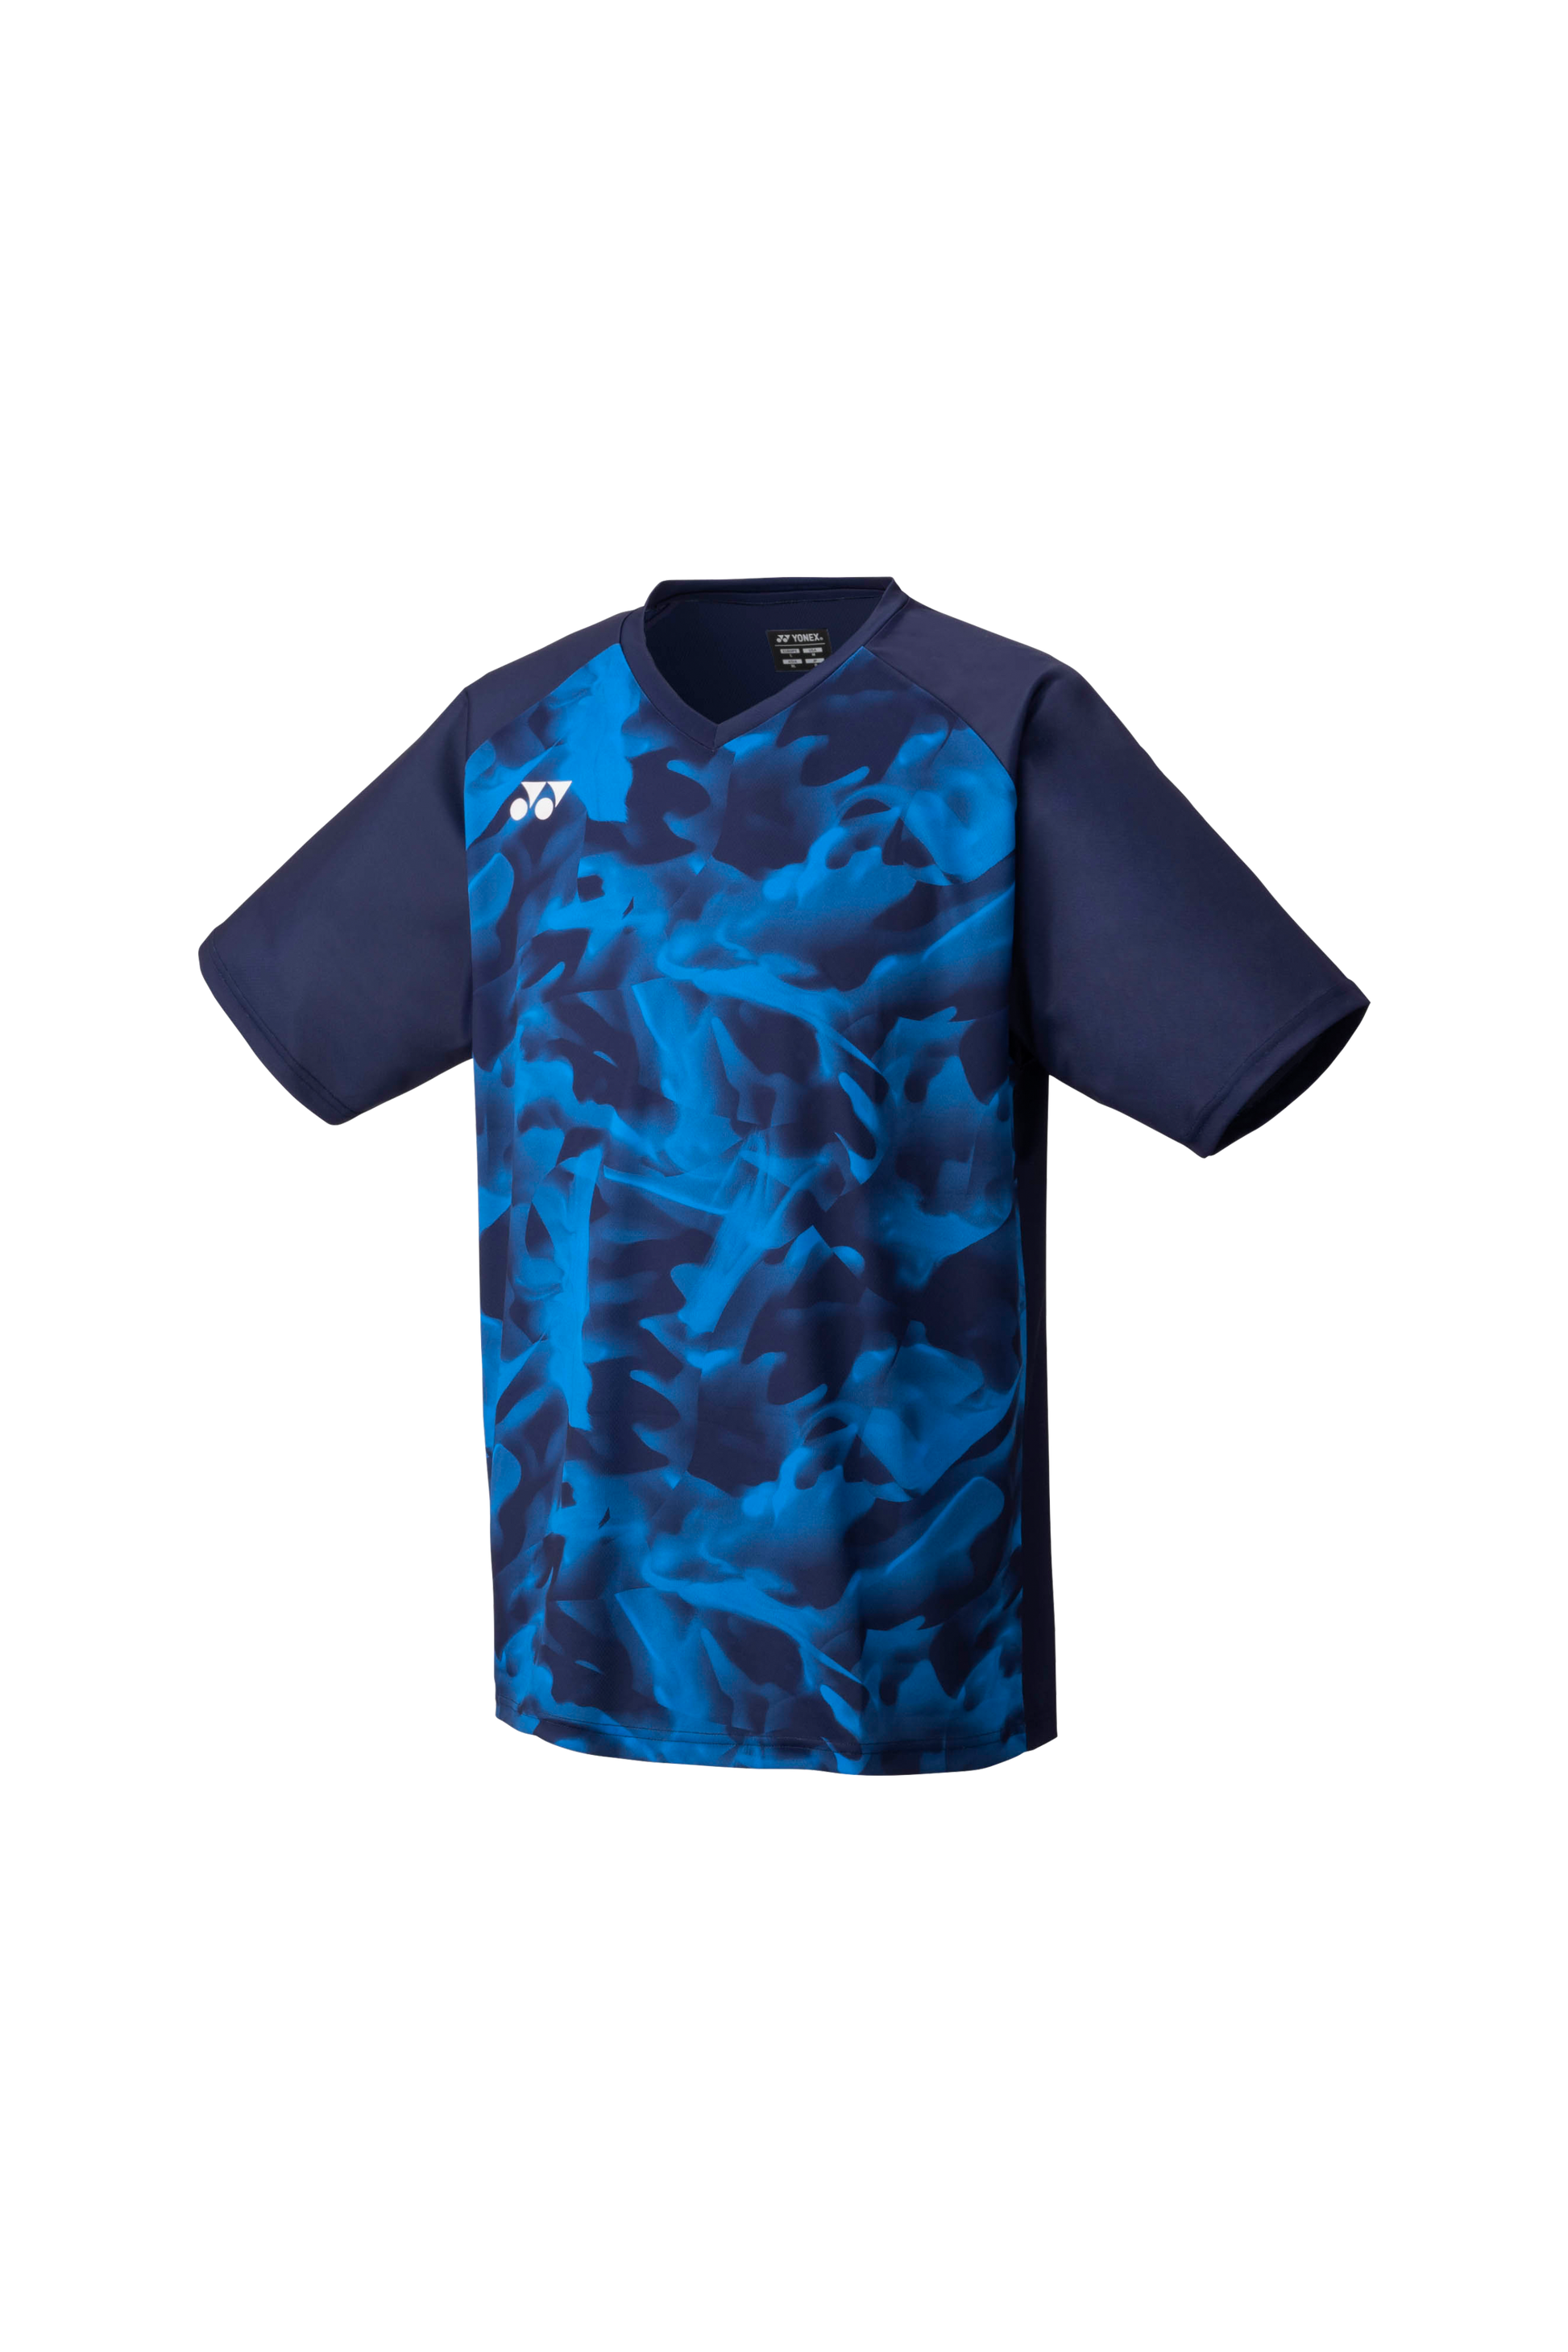 YONEX Men's Team Shirts YM0033 - Max Sports